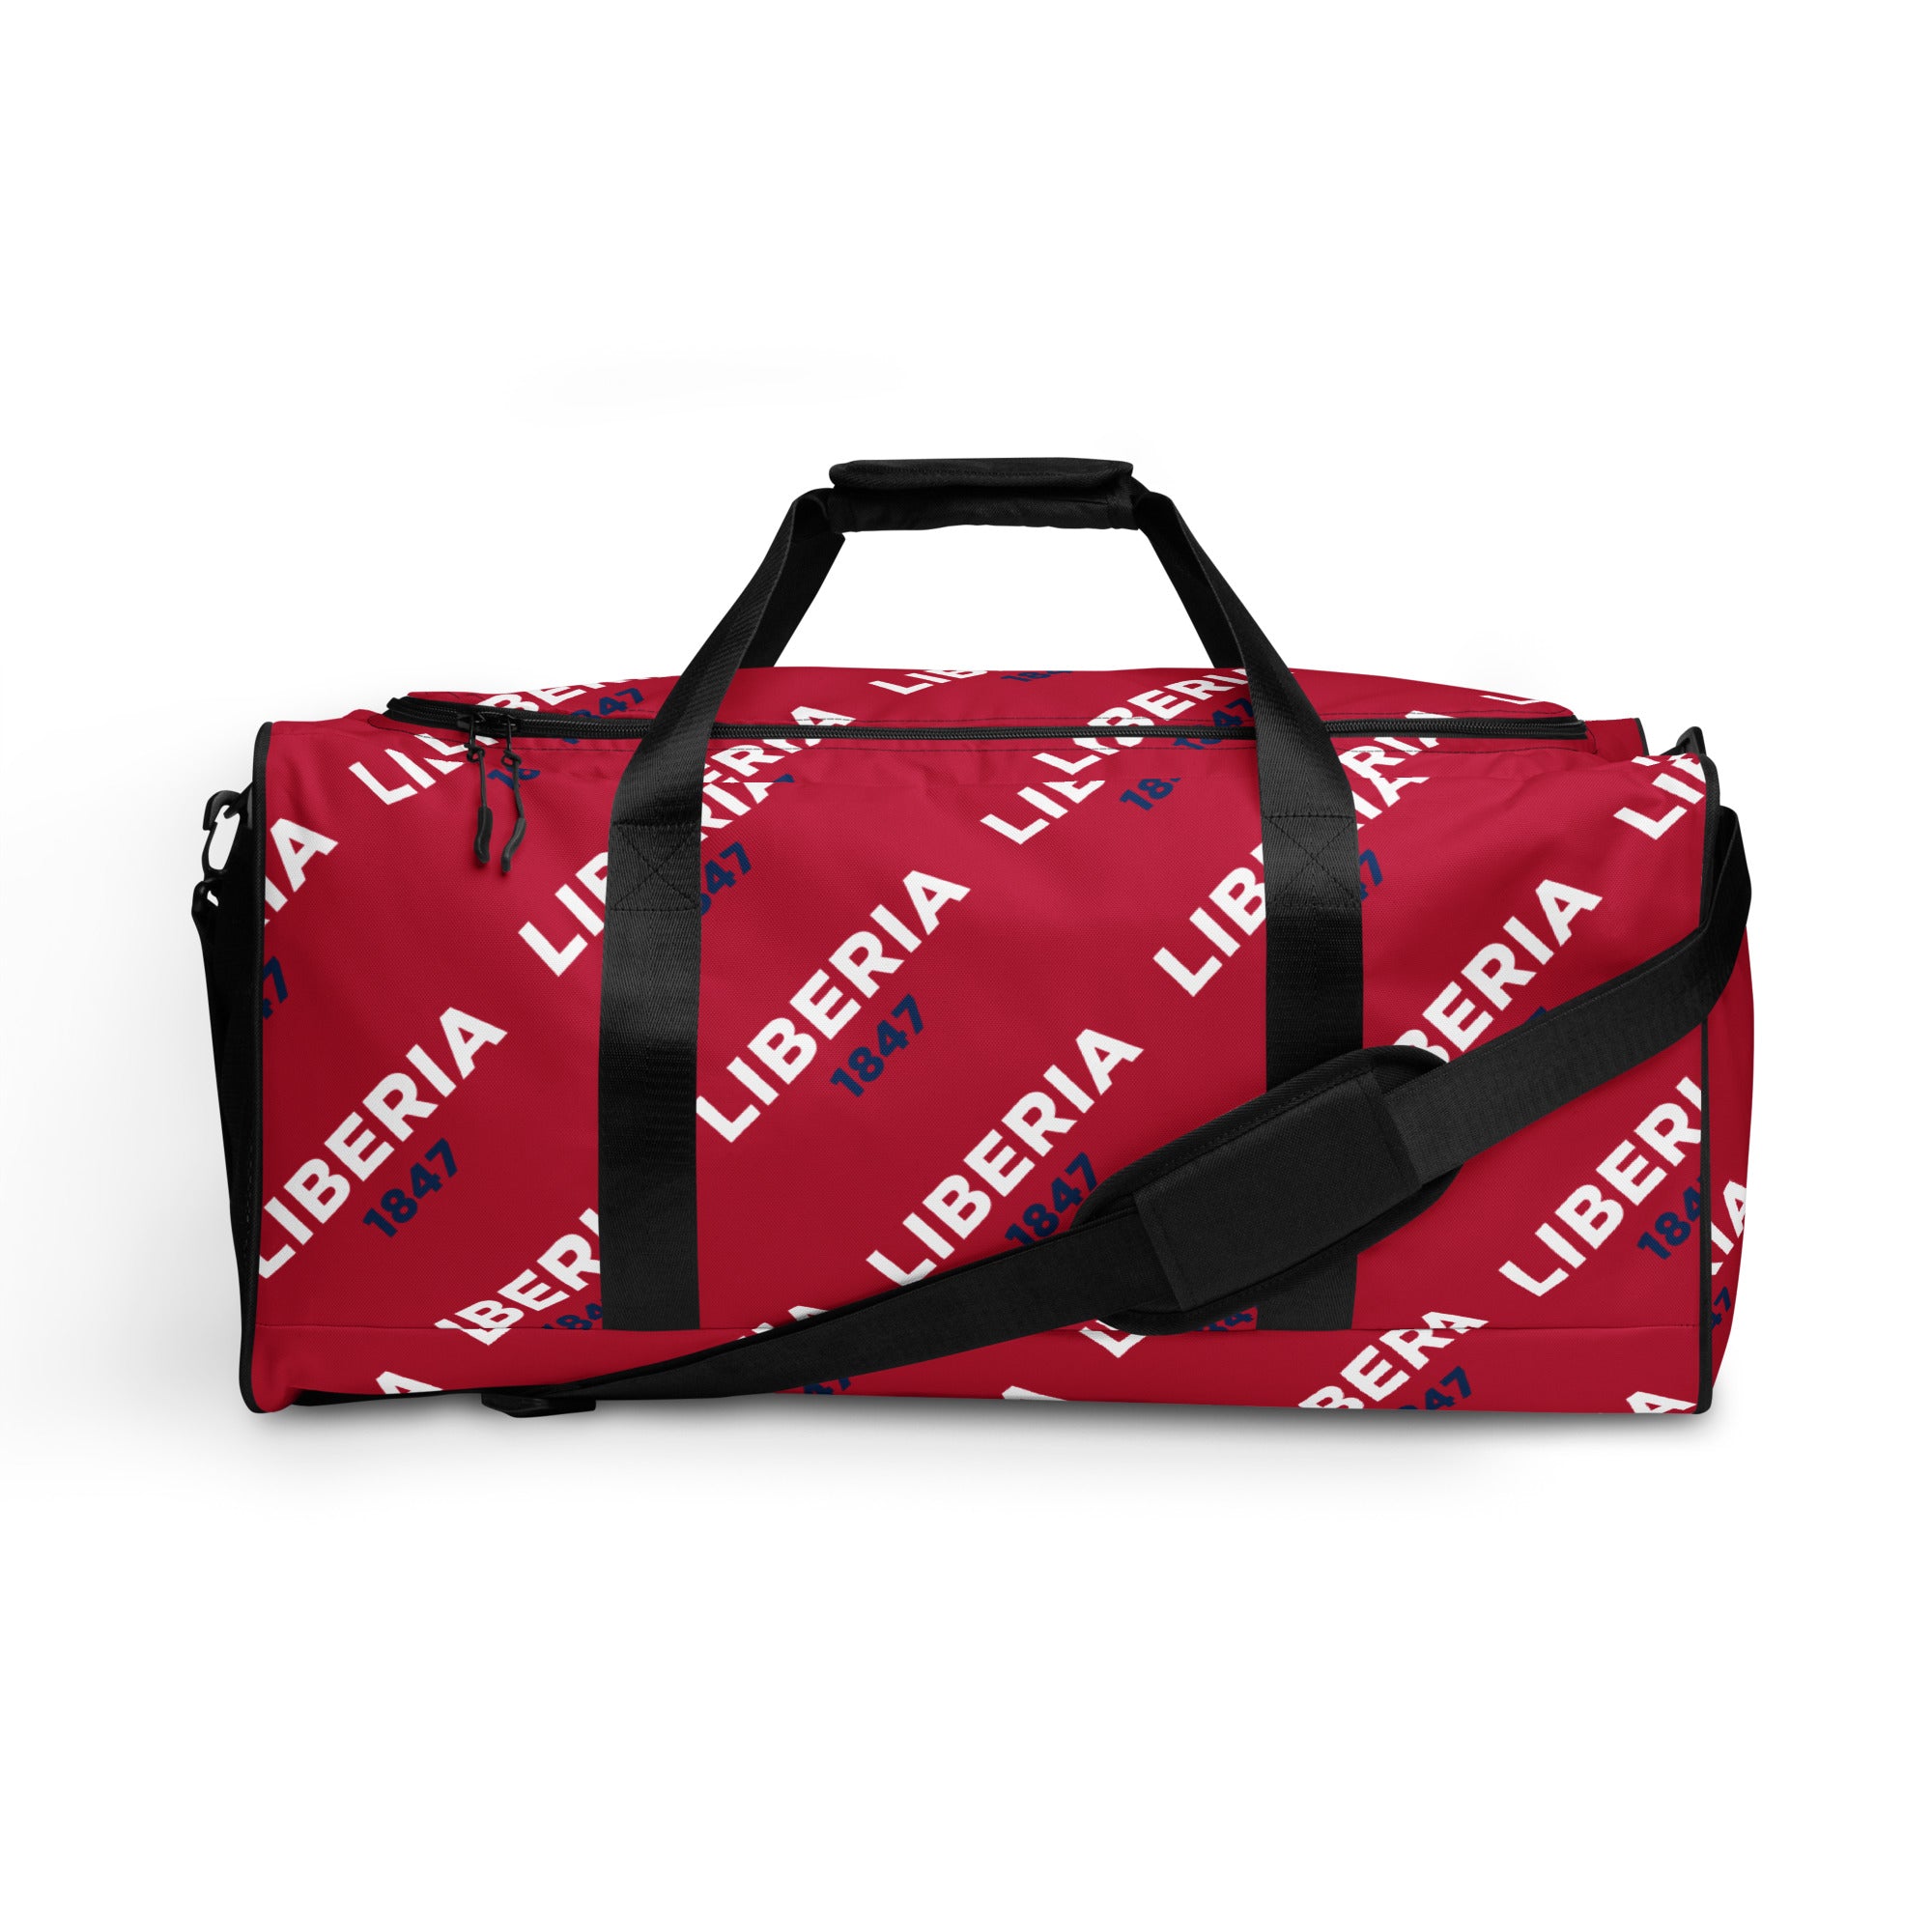 Liberia 1847 Red Duffle bag